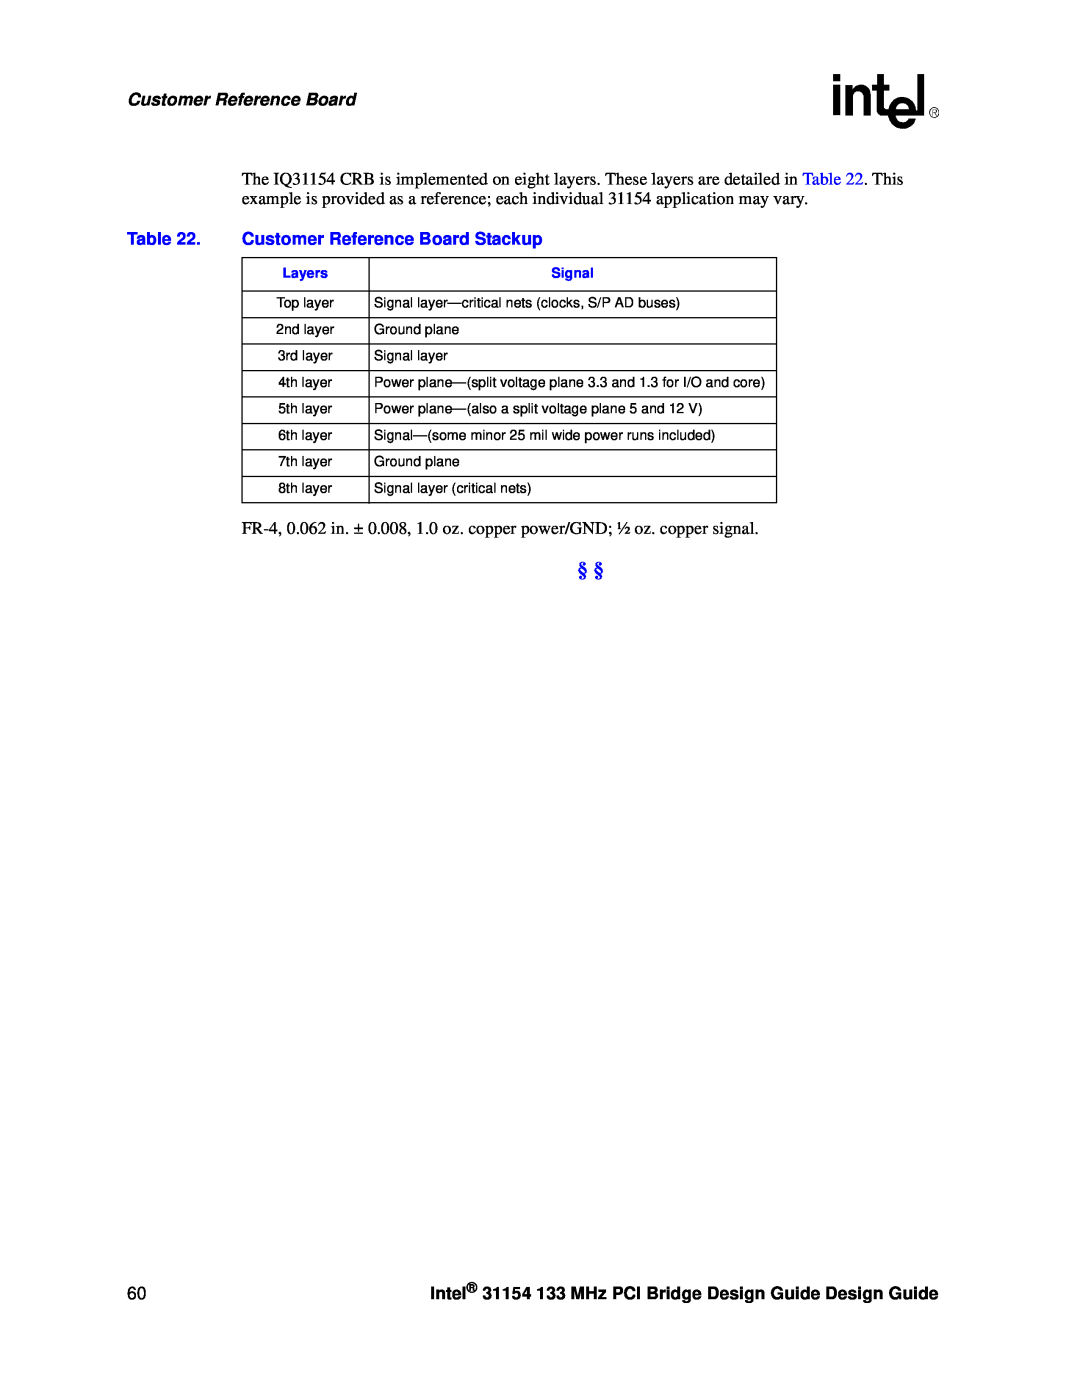 Intel manual Customer Reference Board Stackup, Intel 31154 133 MHz PCI Bridge Design Guide Design Guide 